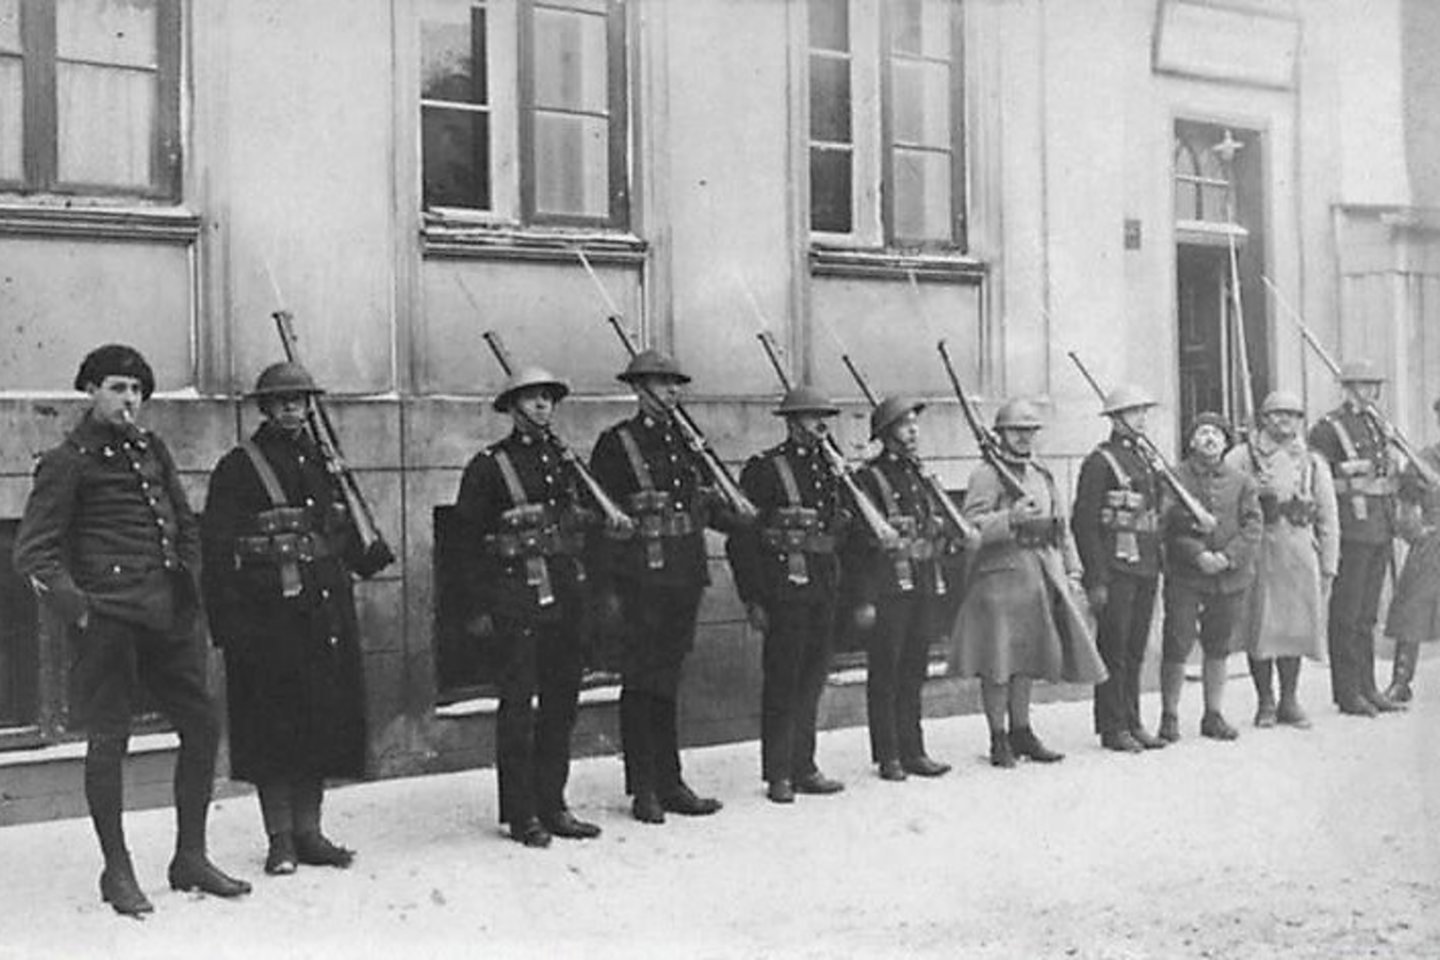  Prancūzai Klaipėdoje prie prefektūros.1922.<br>MLIM nuotr. 